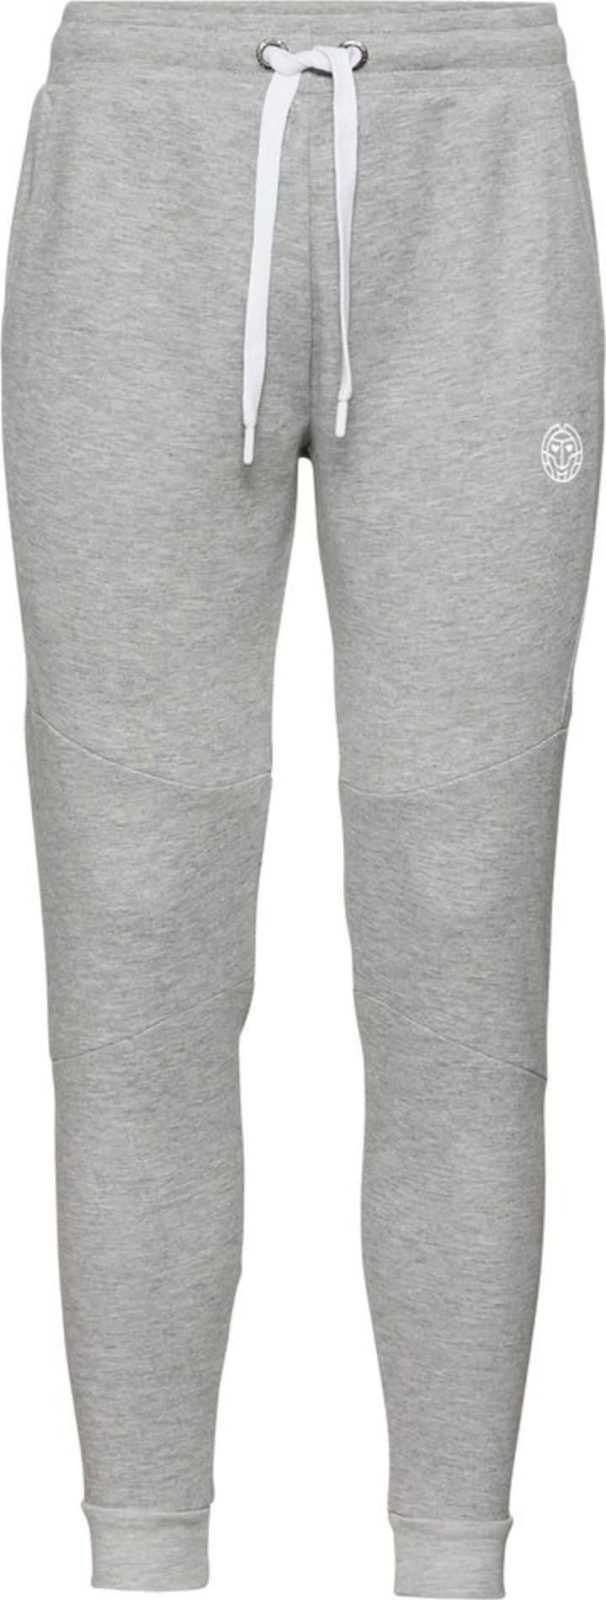 BIDI BADU Sportovní kalhoty 'Matu' šedý melír / bílá